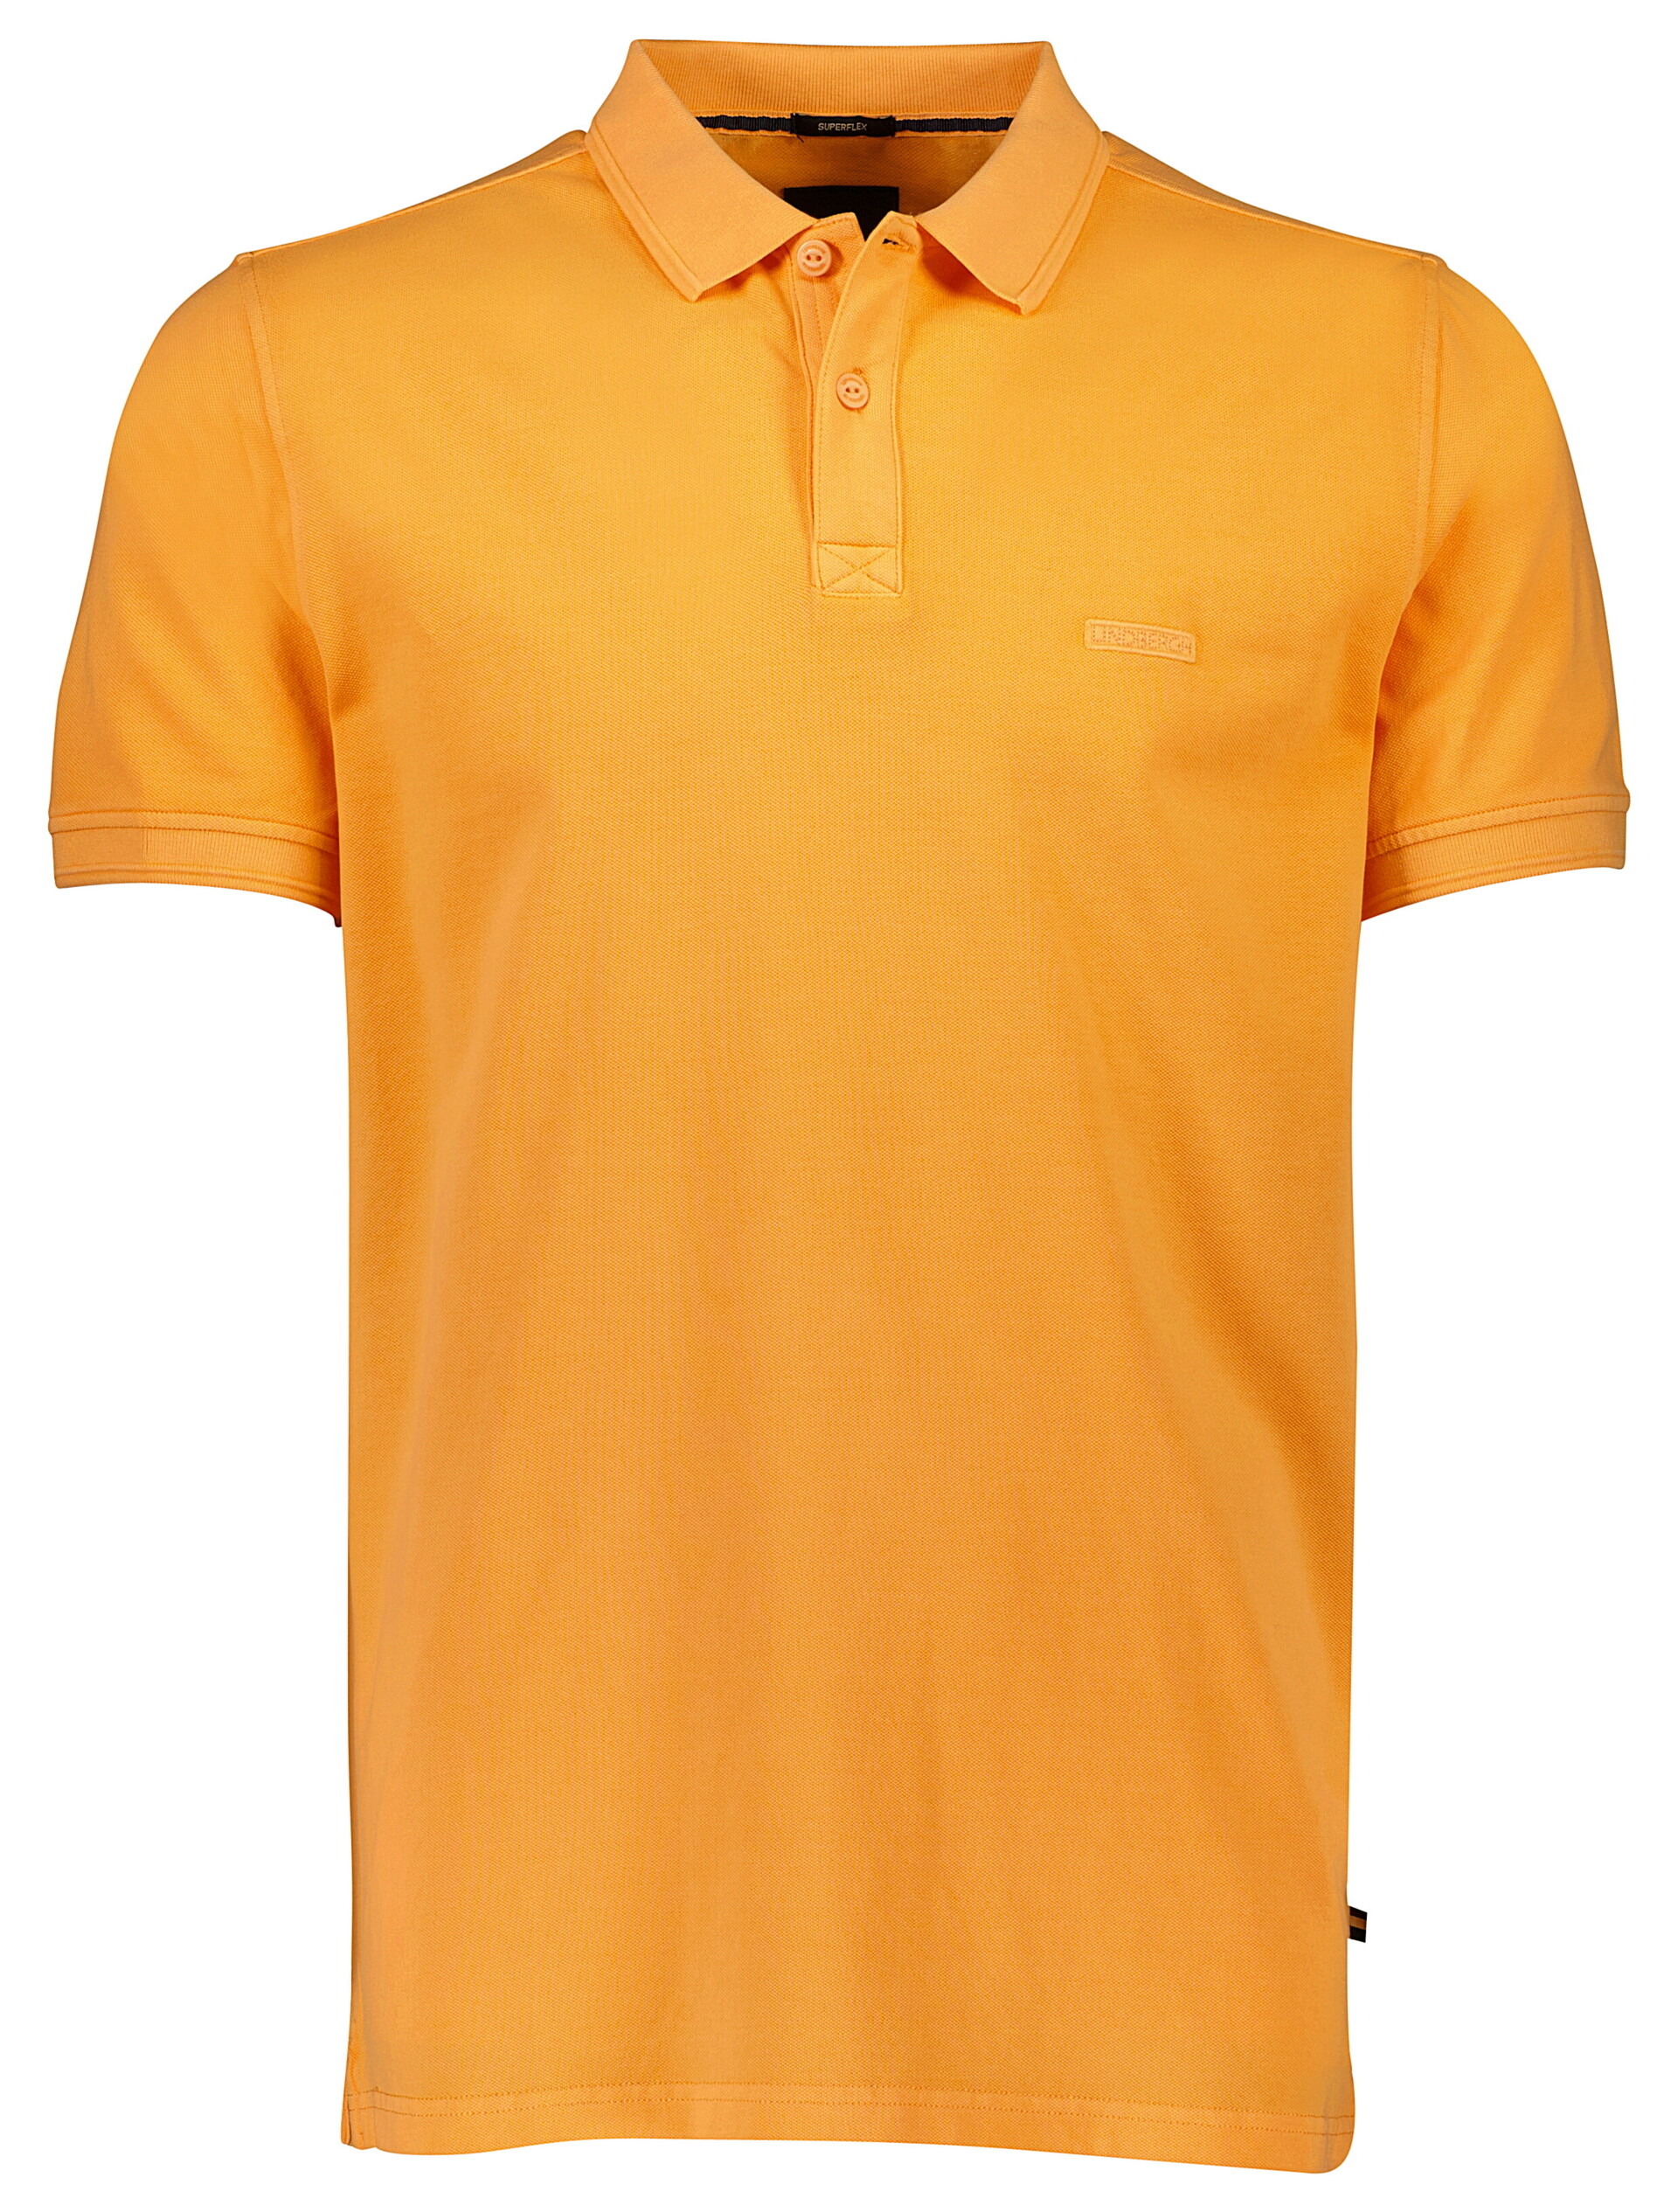 Lindbergh Polo shirt orange / pastel orange